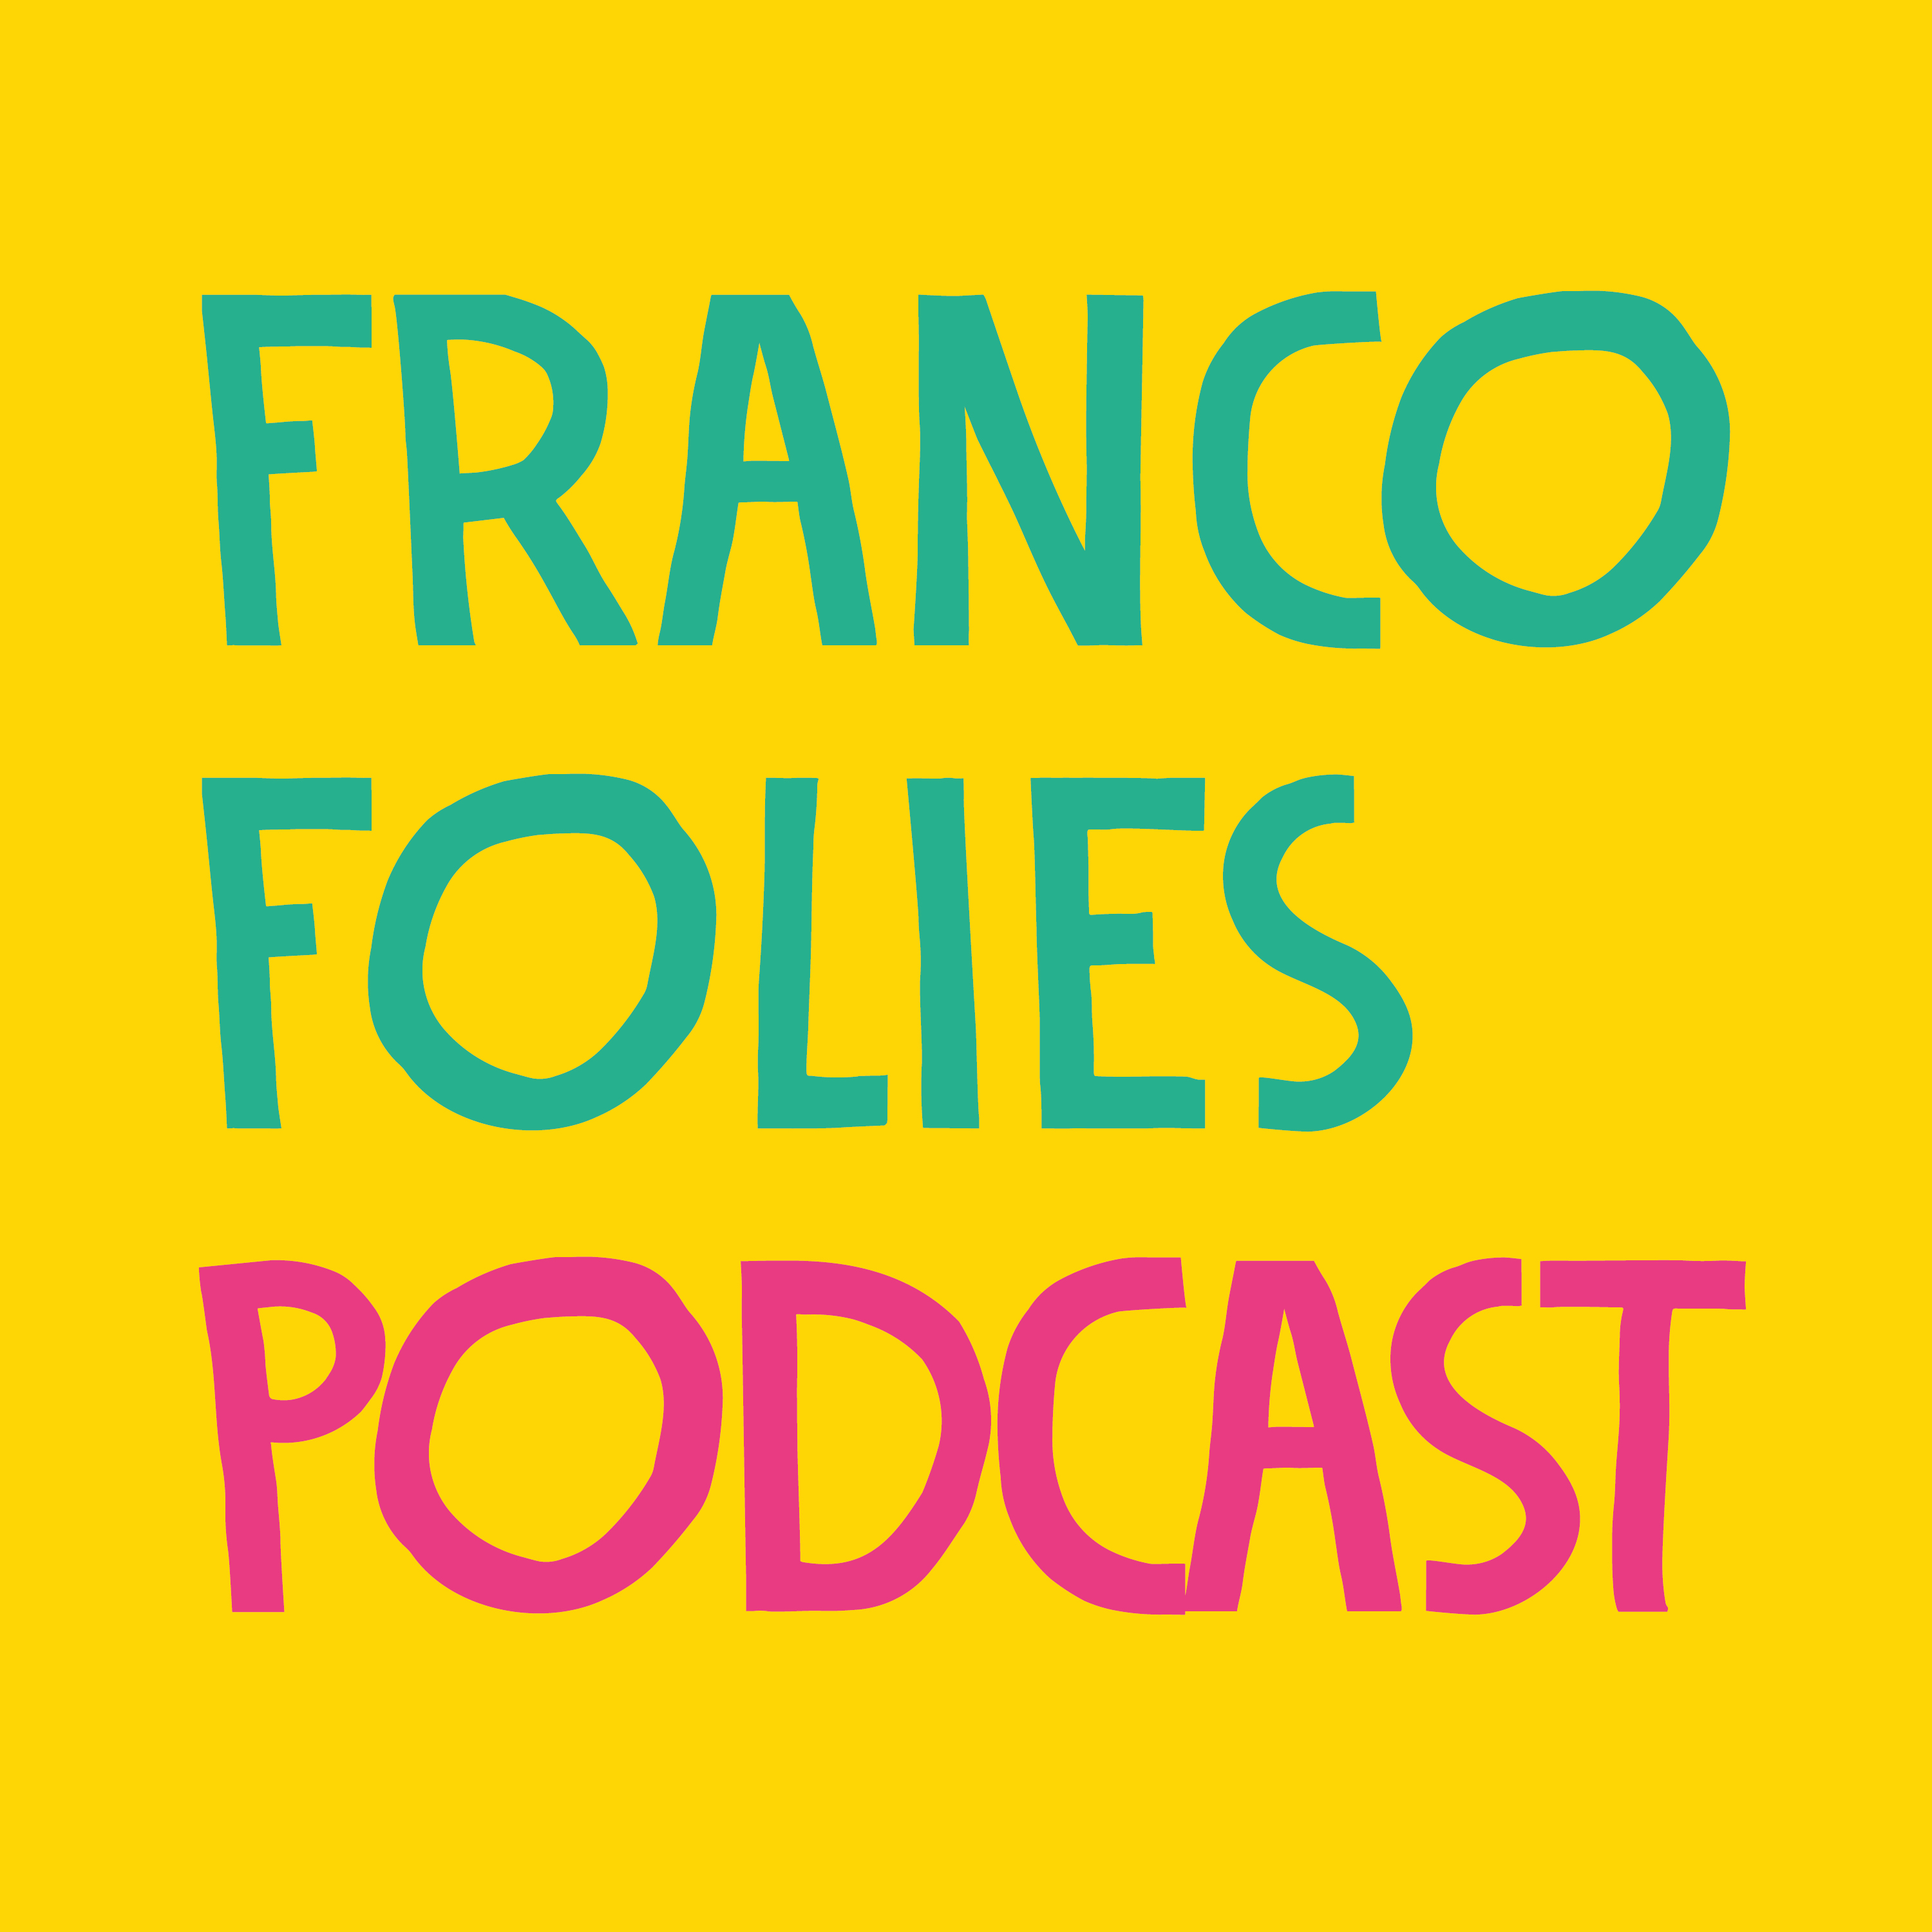 Francofolies podcast sur fond jaune